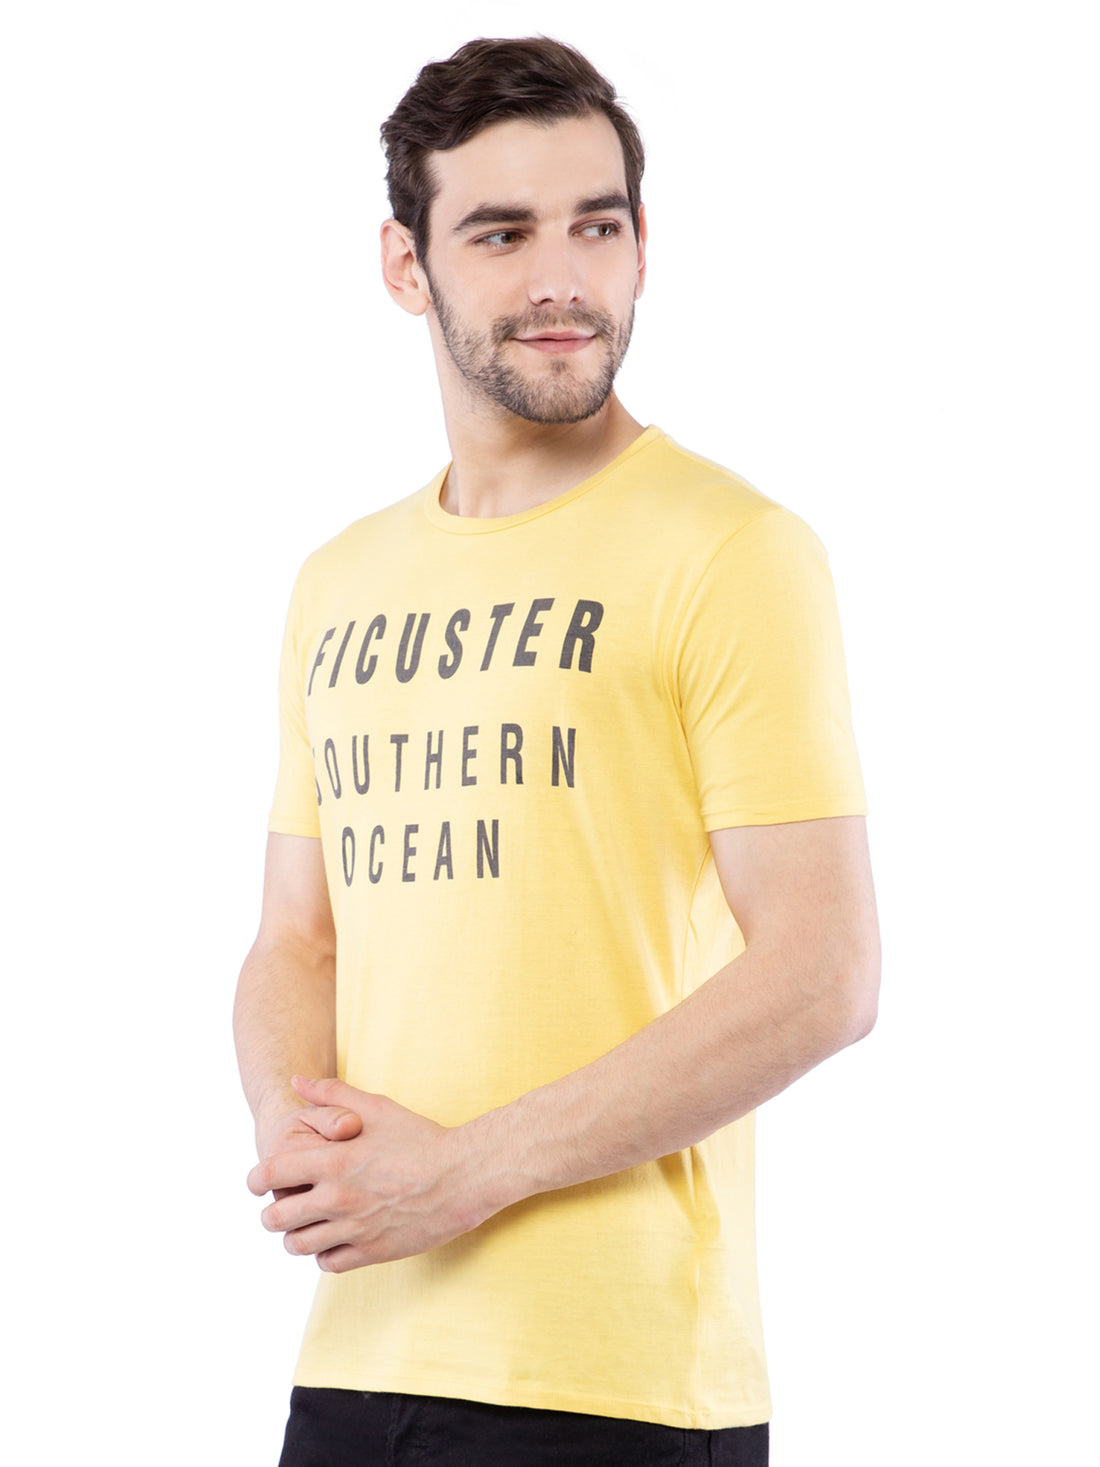 Ficuster Men Yellow Crew Neck T-Shirt